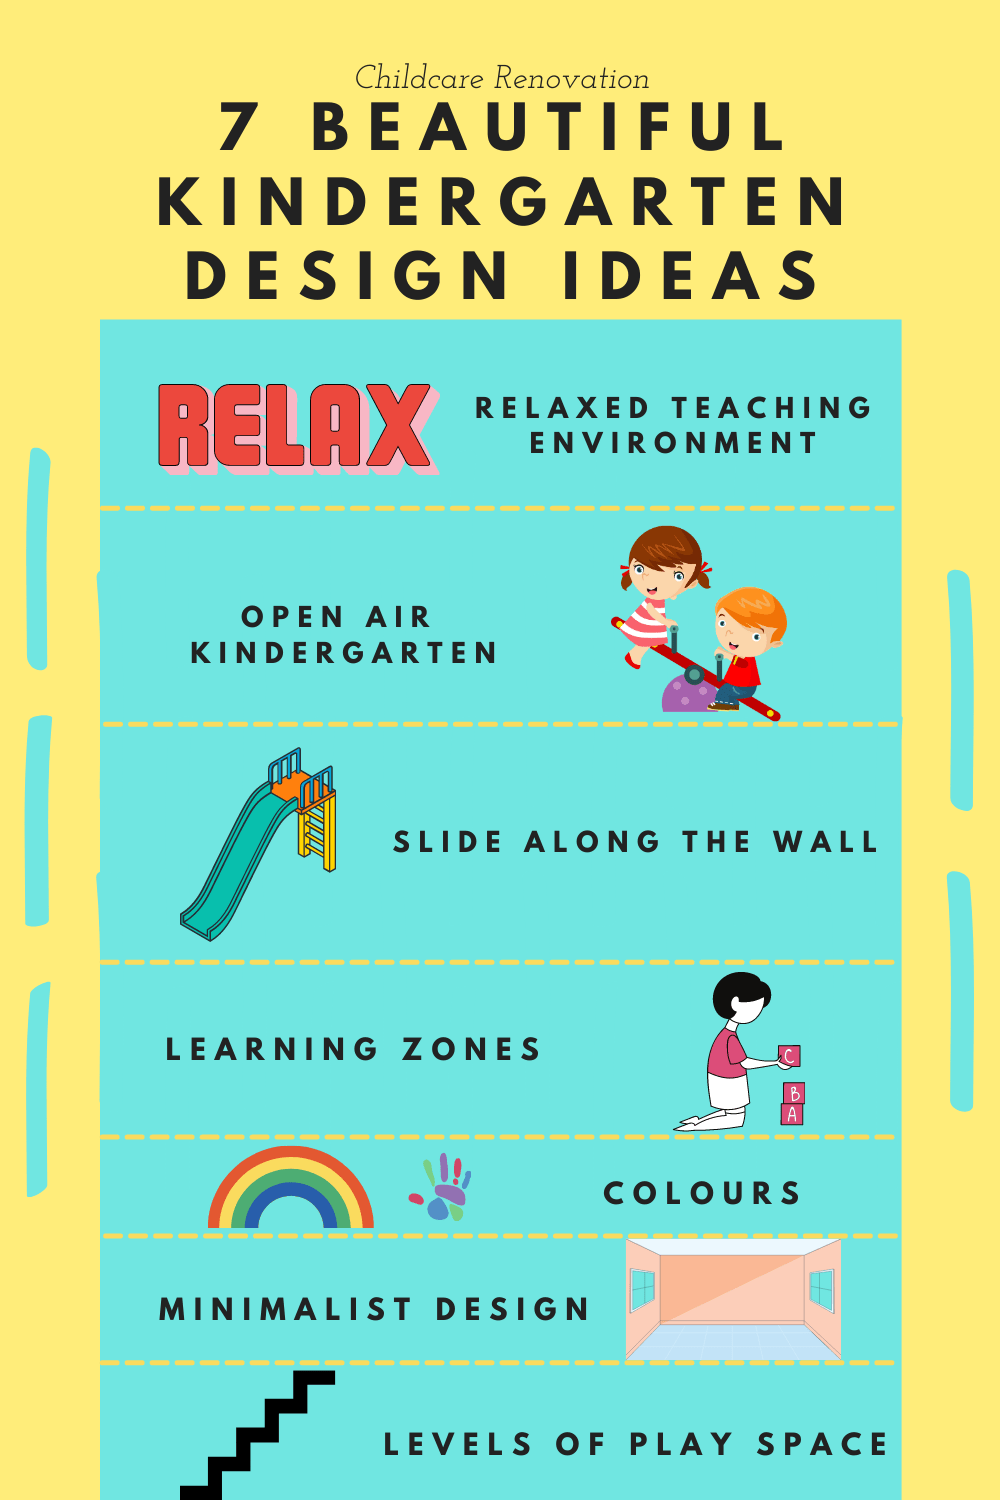 7 Beautiful Kindergarten Design Ideas